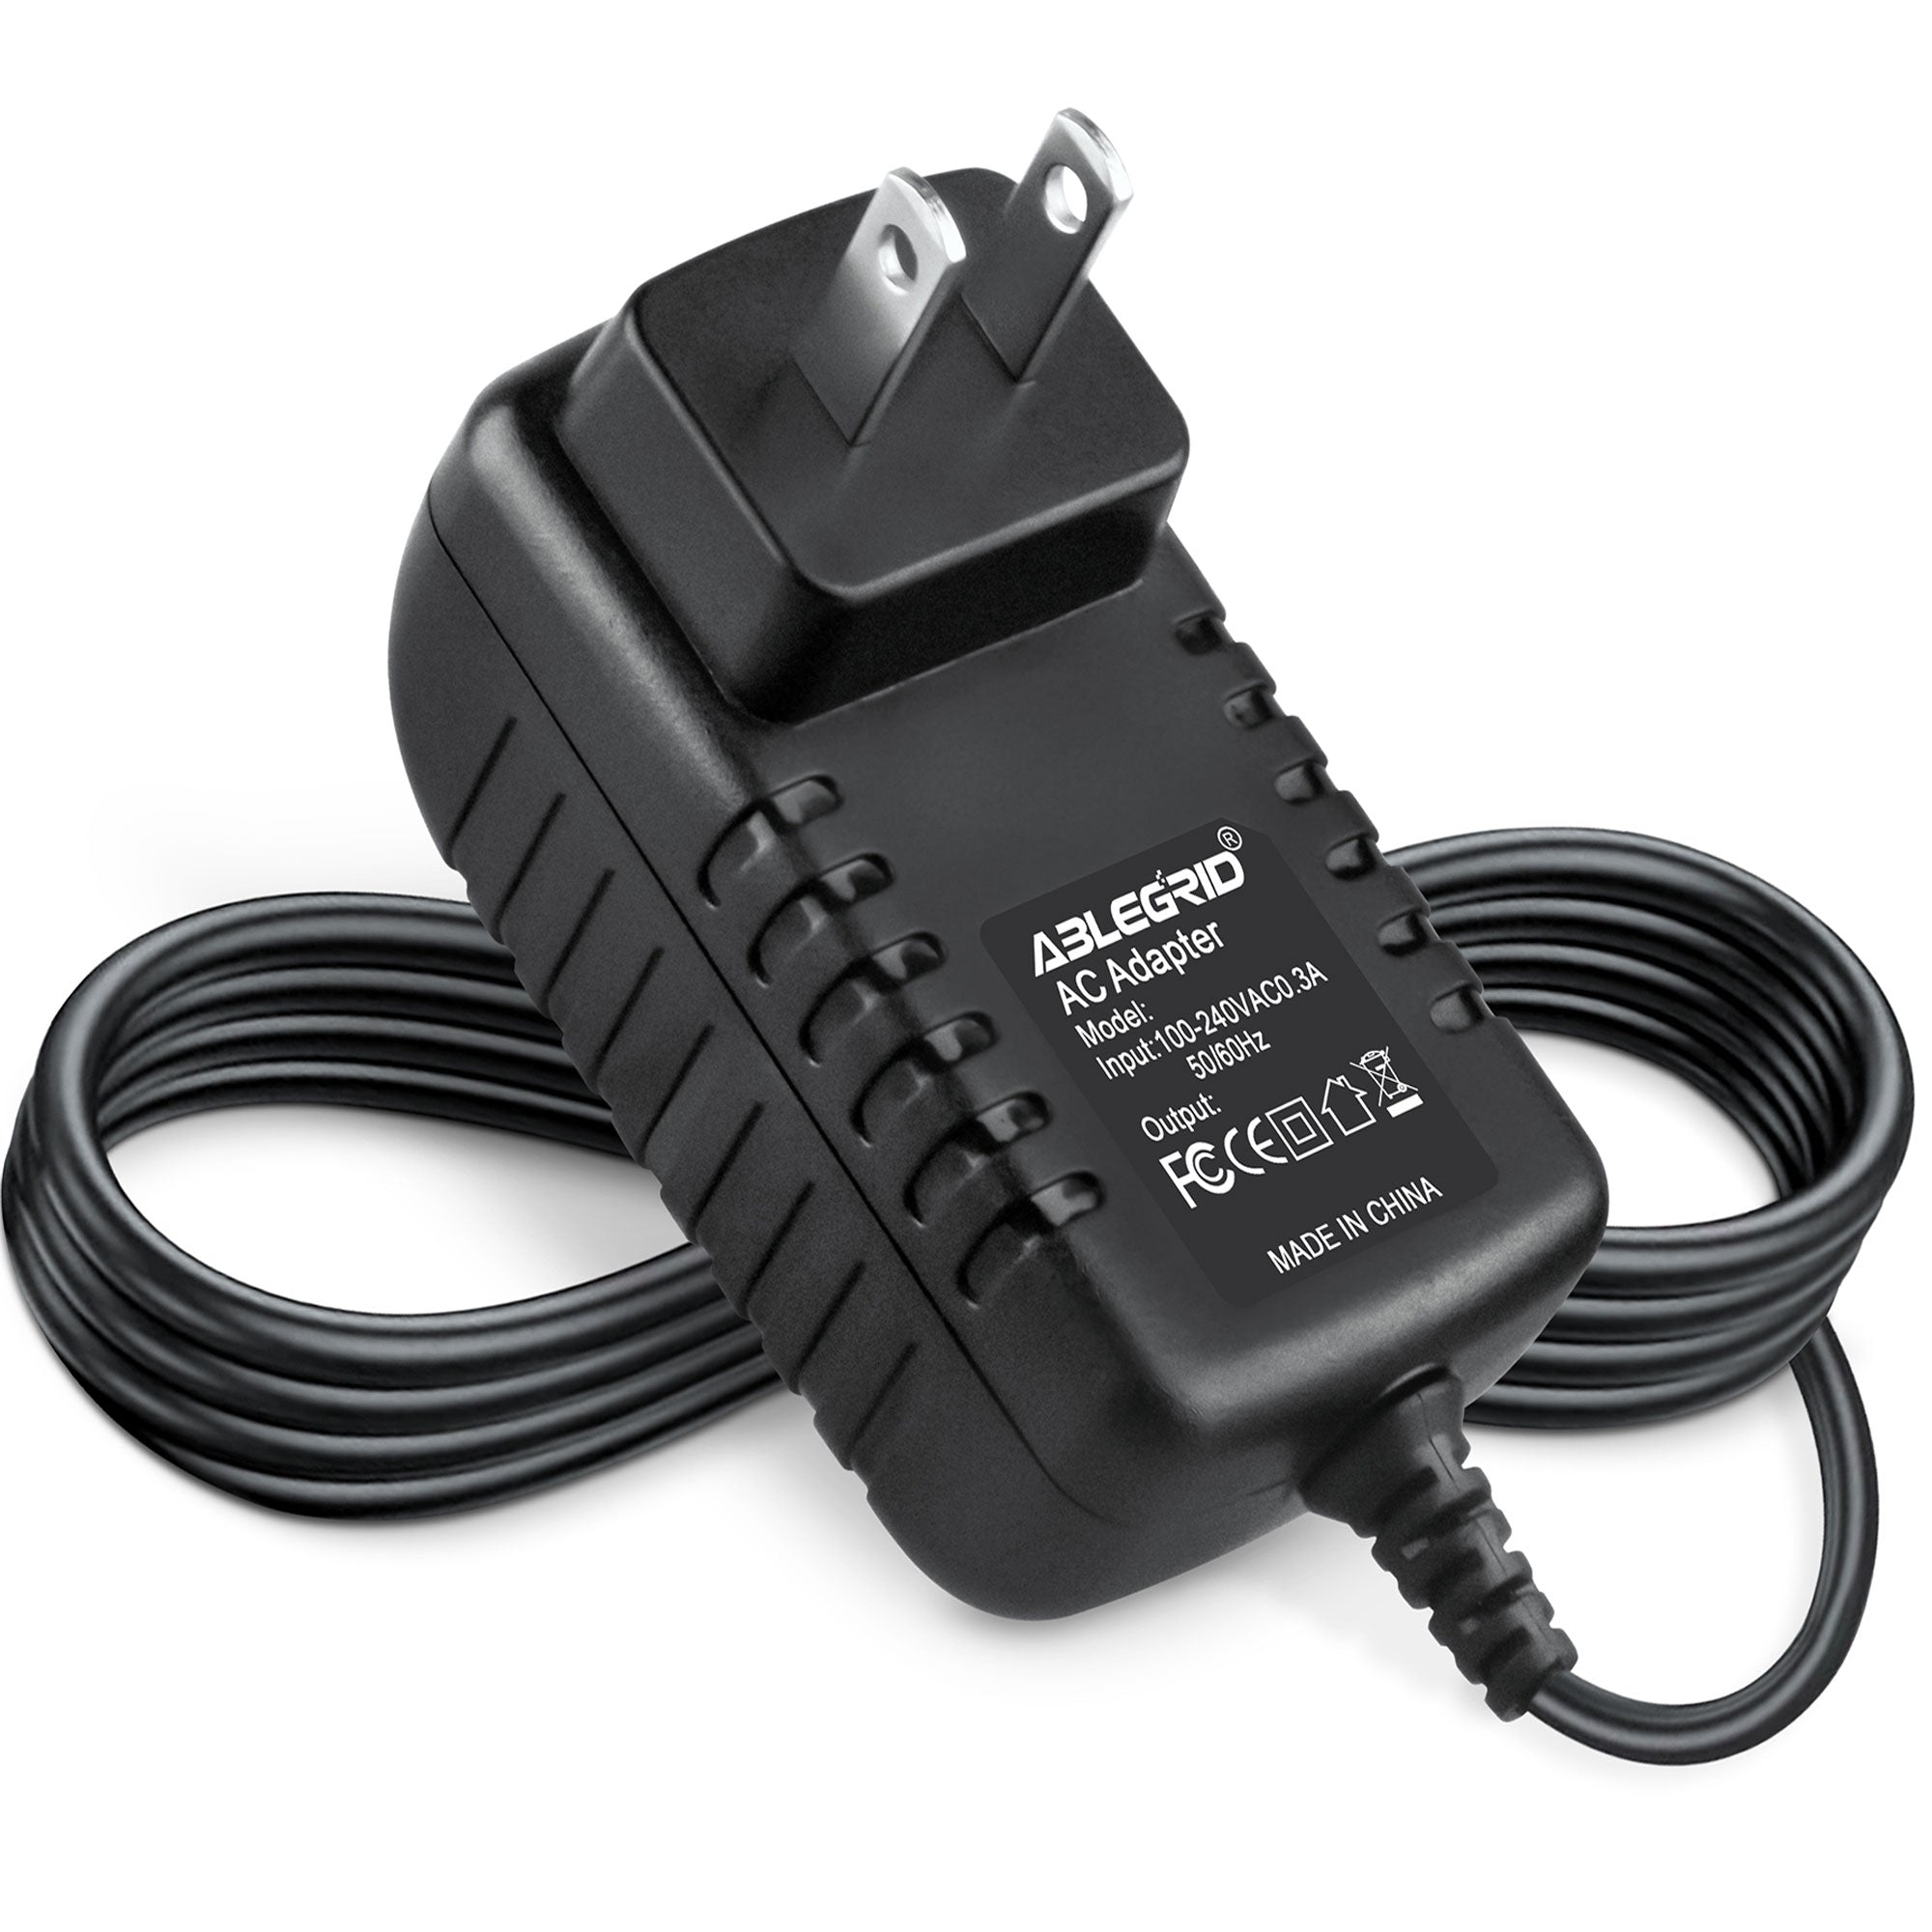 AbleGrid 12V AC Adapter For Motorola Radio CP150 CP200 PR400 CR400 EP450 HT750 HT1250 HT1250&#x2022;LS+ HT1550 HT1550 XLS HTN9000C MTX950 MT2000 GP320 GP340 GP360 GP380 GP1200 JT1000 XTS3000 Charger Power Supply Cord